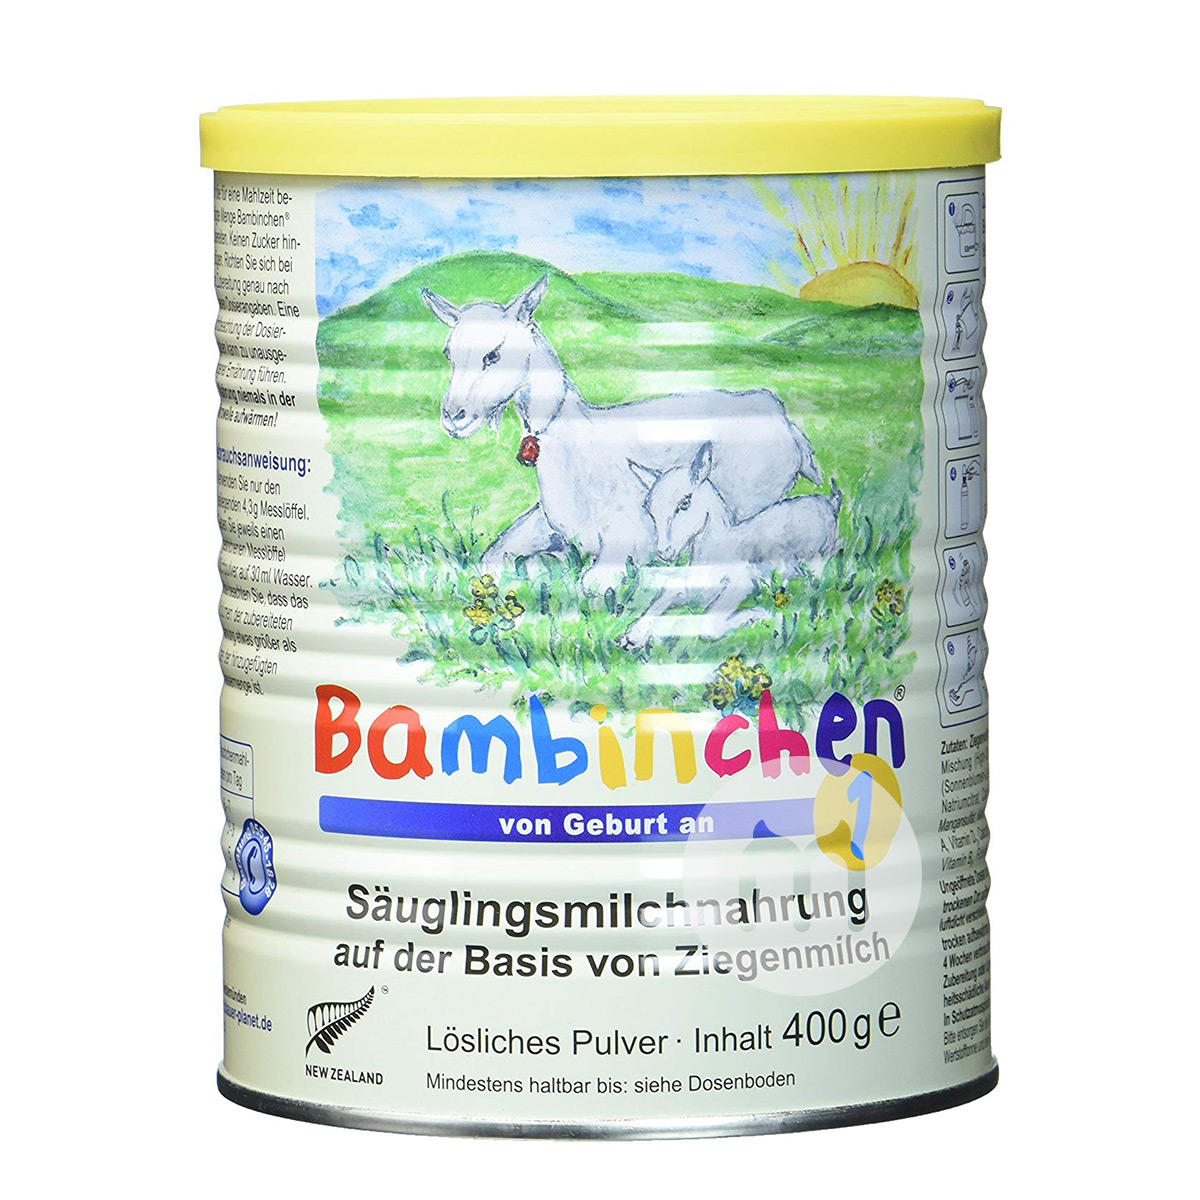 Bambinchenドイツの青い星の羊の粉ミルクの1段*6